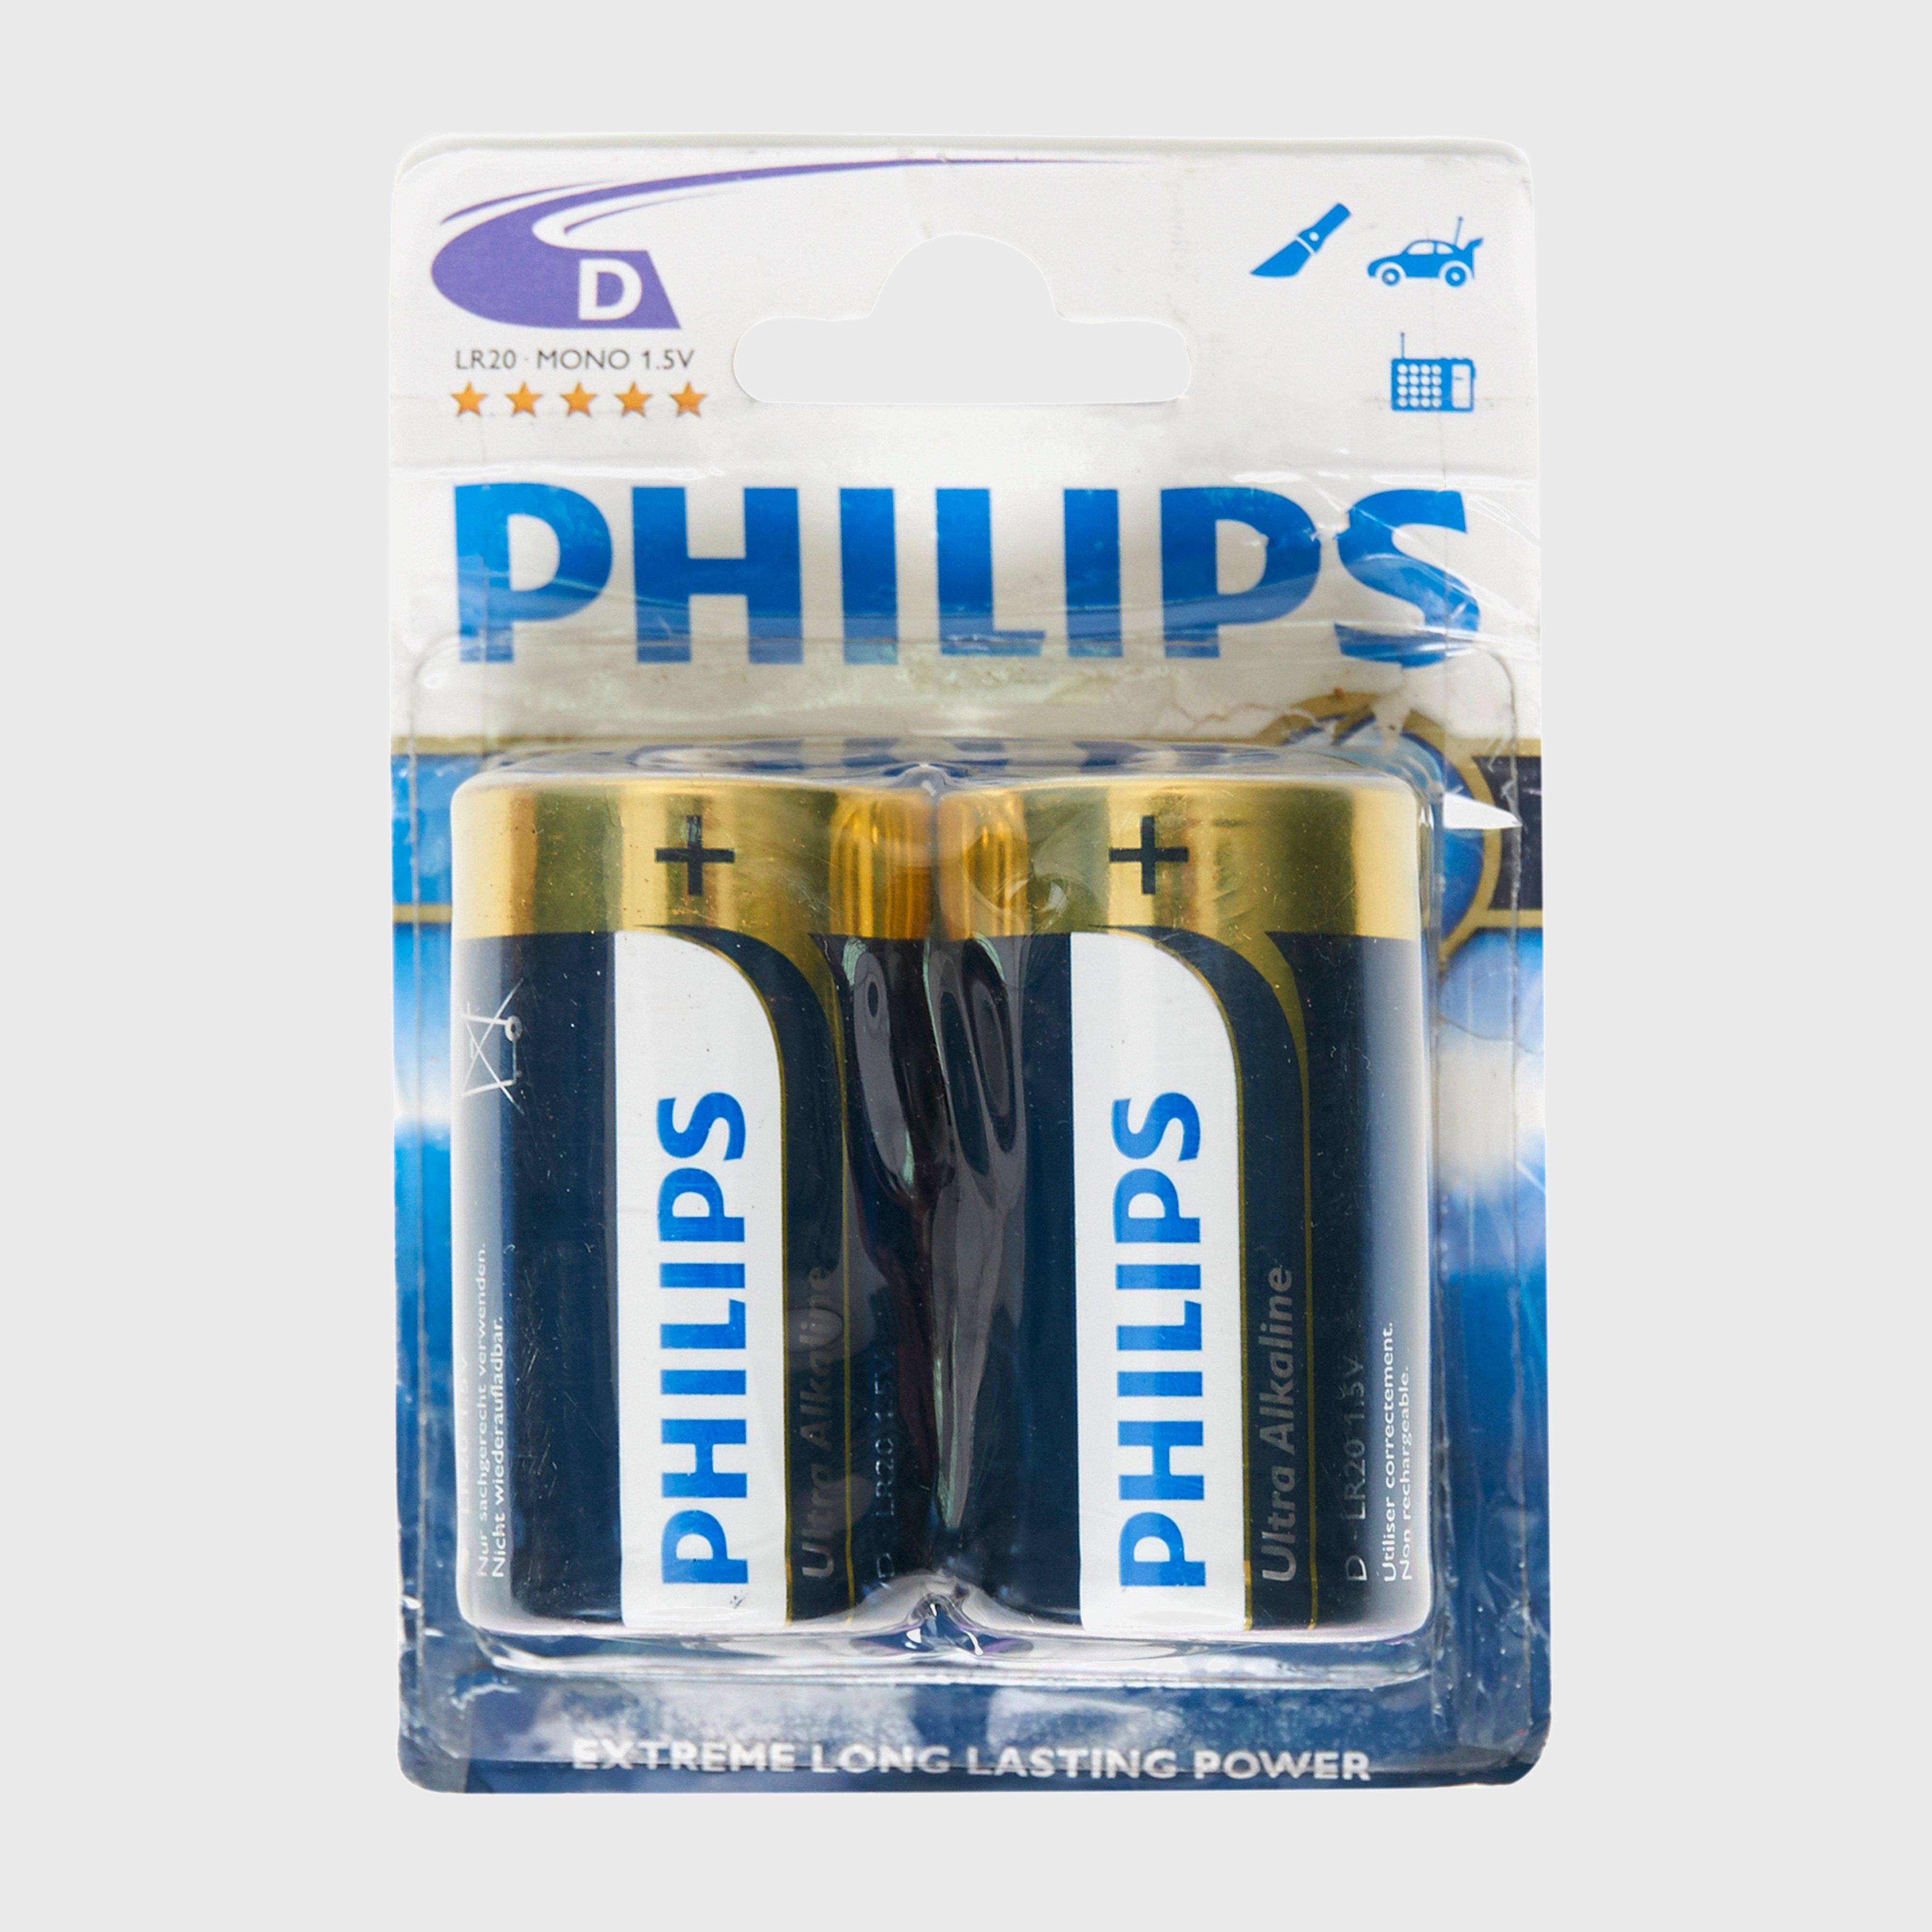 Phillips Ultra Alkaline D LR20 Batteries 2 Pack Multi Coloured